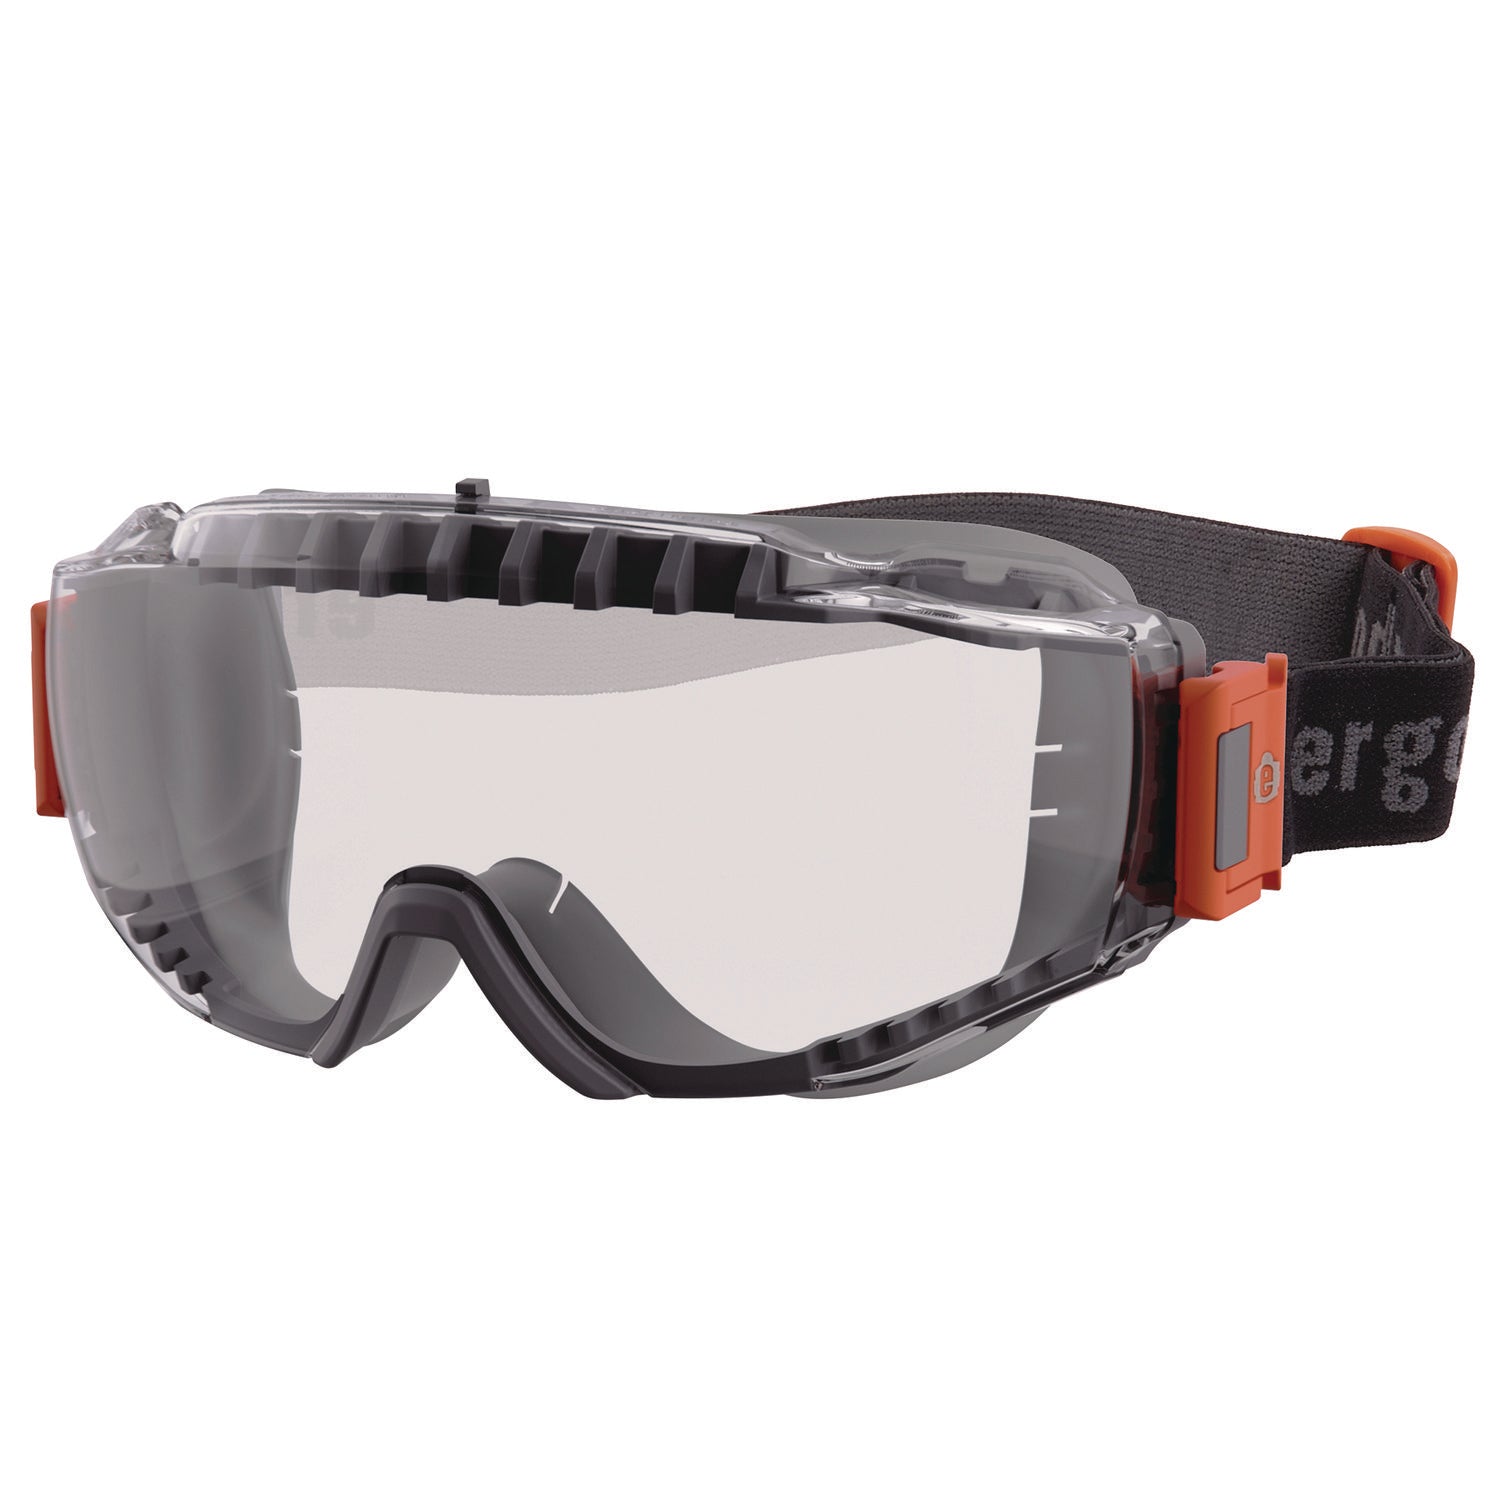 skullerz-modi-otg-anti-scratch-enhanced-anti-fog-safety-goggles-with-elastic-strap-clear-lens-ships-in-1-3-business-days_ego60300 - 1